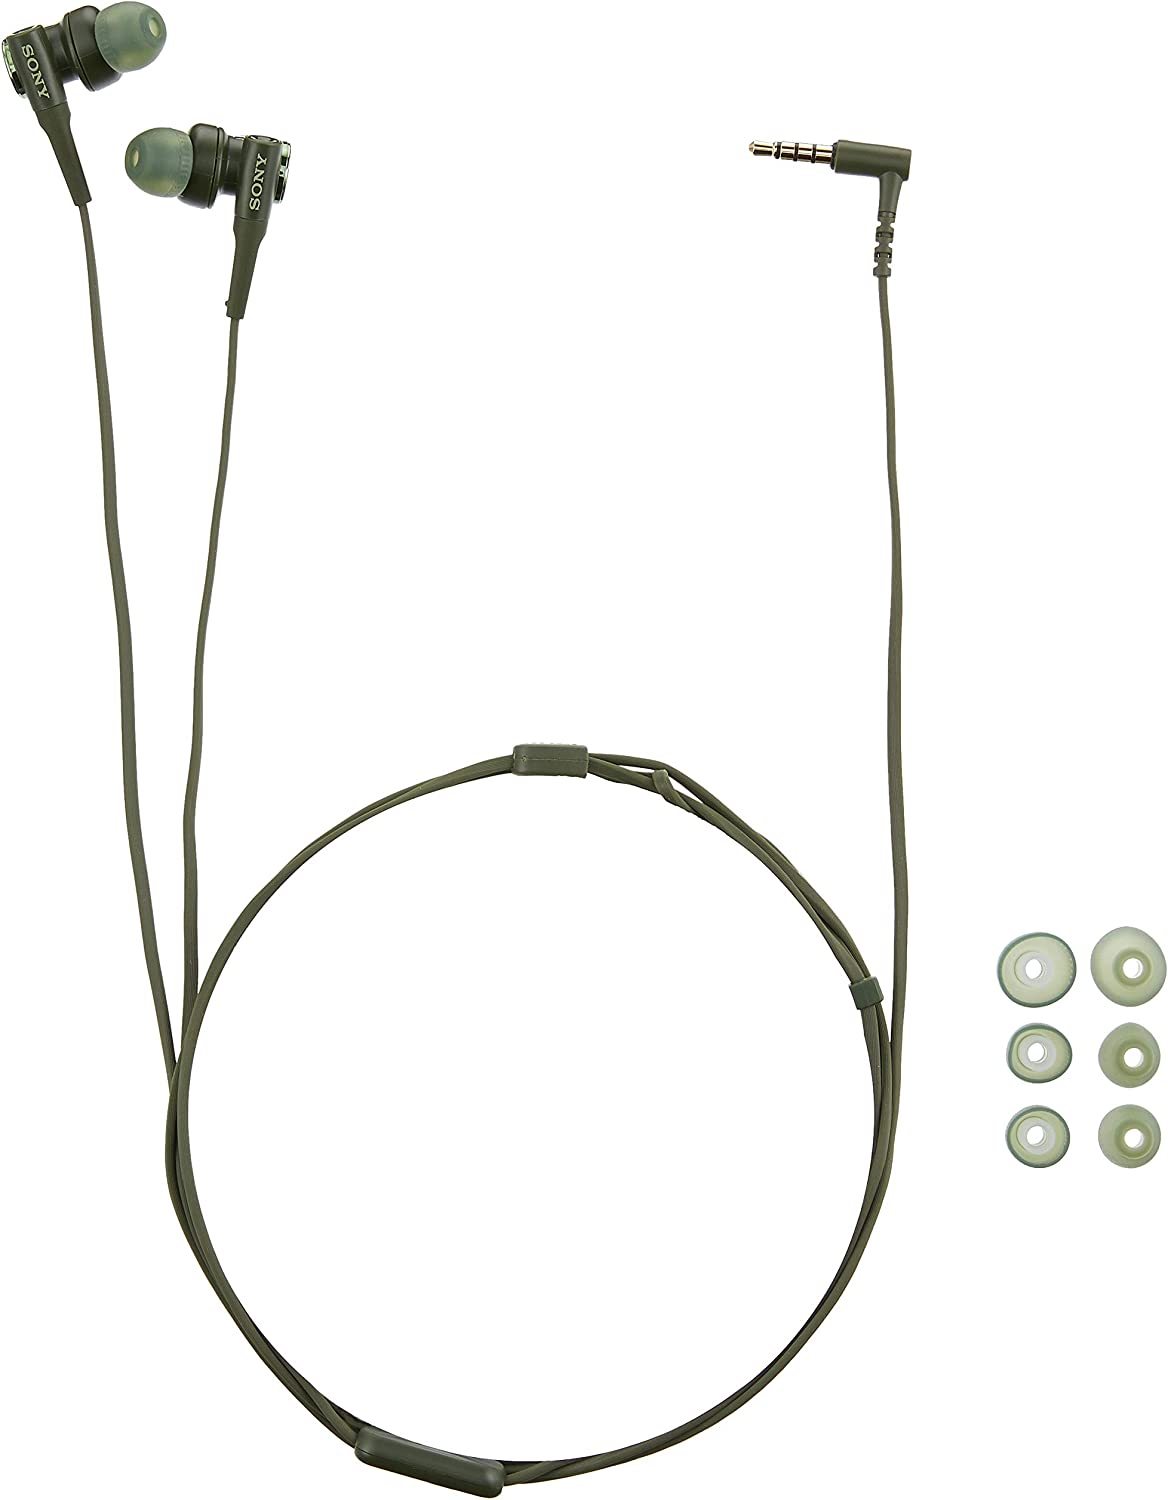 Sony EXTRA BASS In-Ear Wired Headphones / Earphones